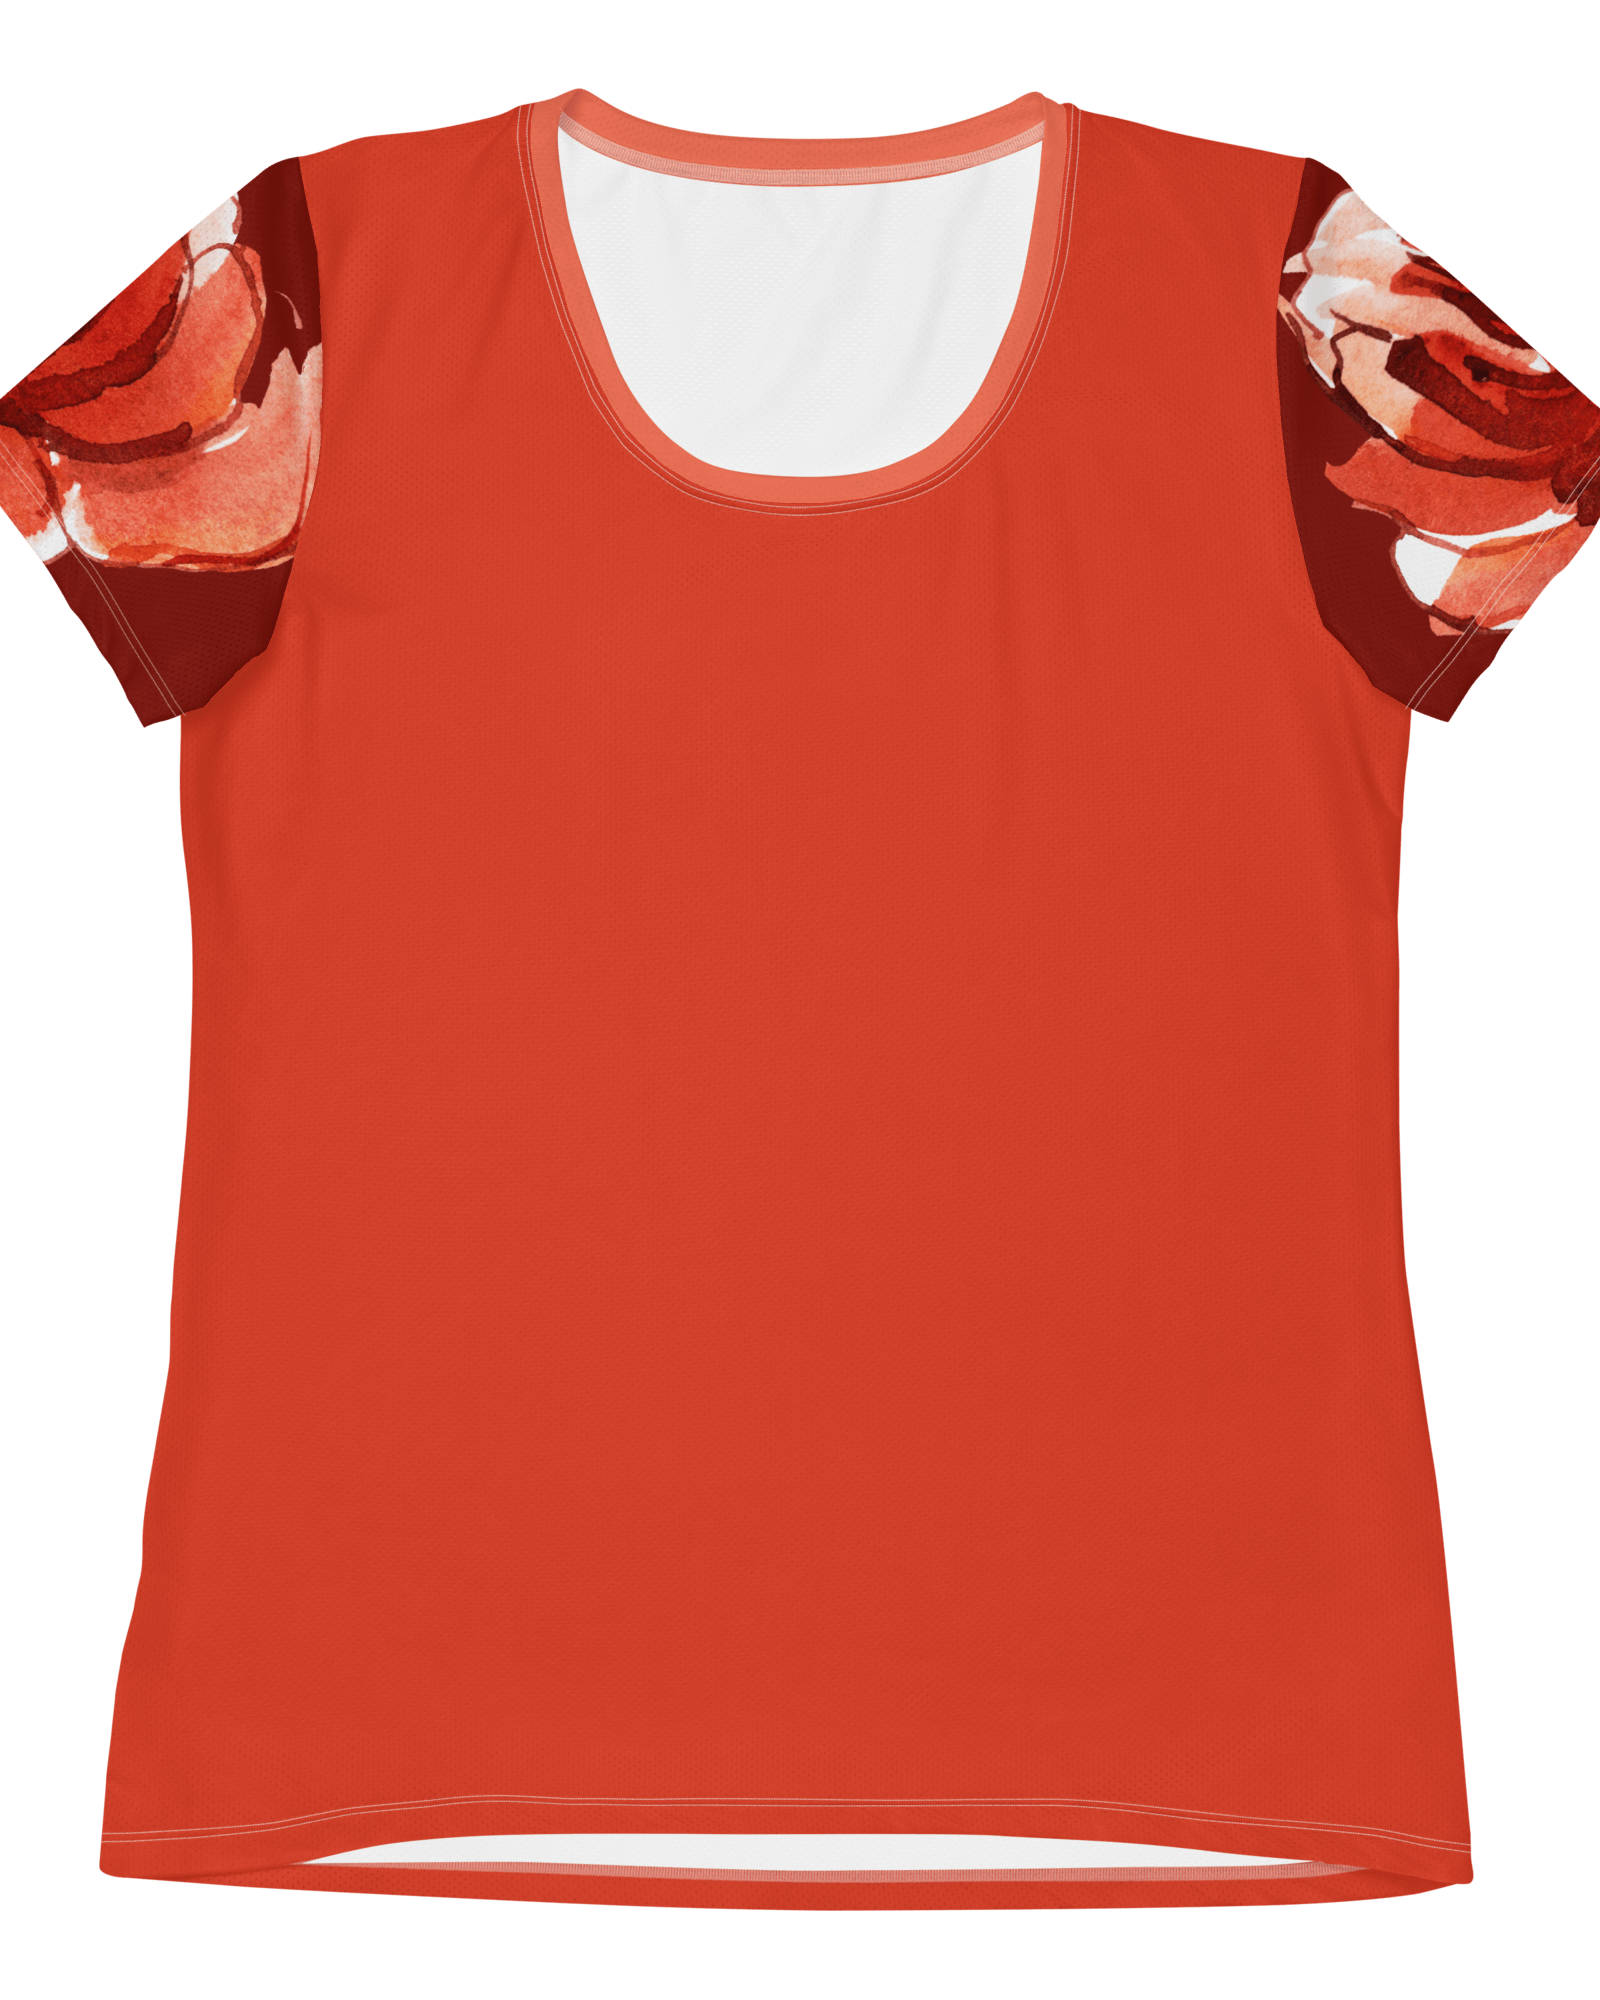 Watercolour English Rose Women's Athletic Shirt women's athletic shirts Jolly & Goode